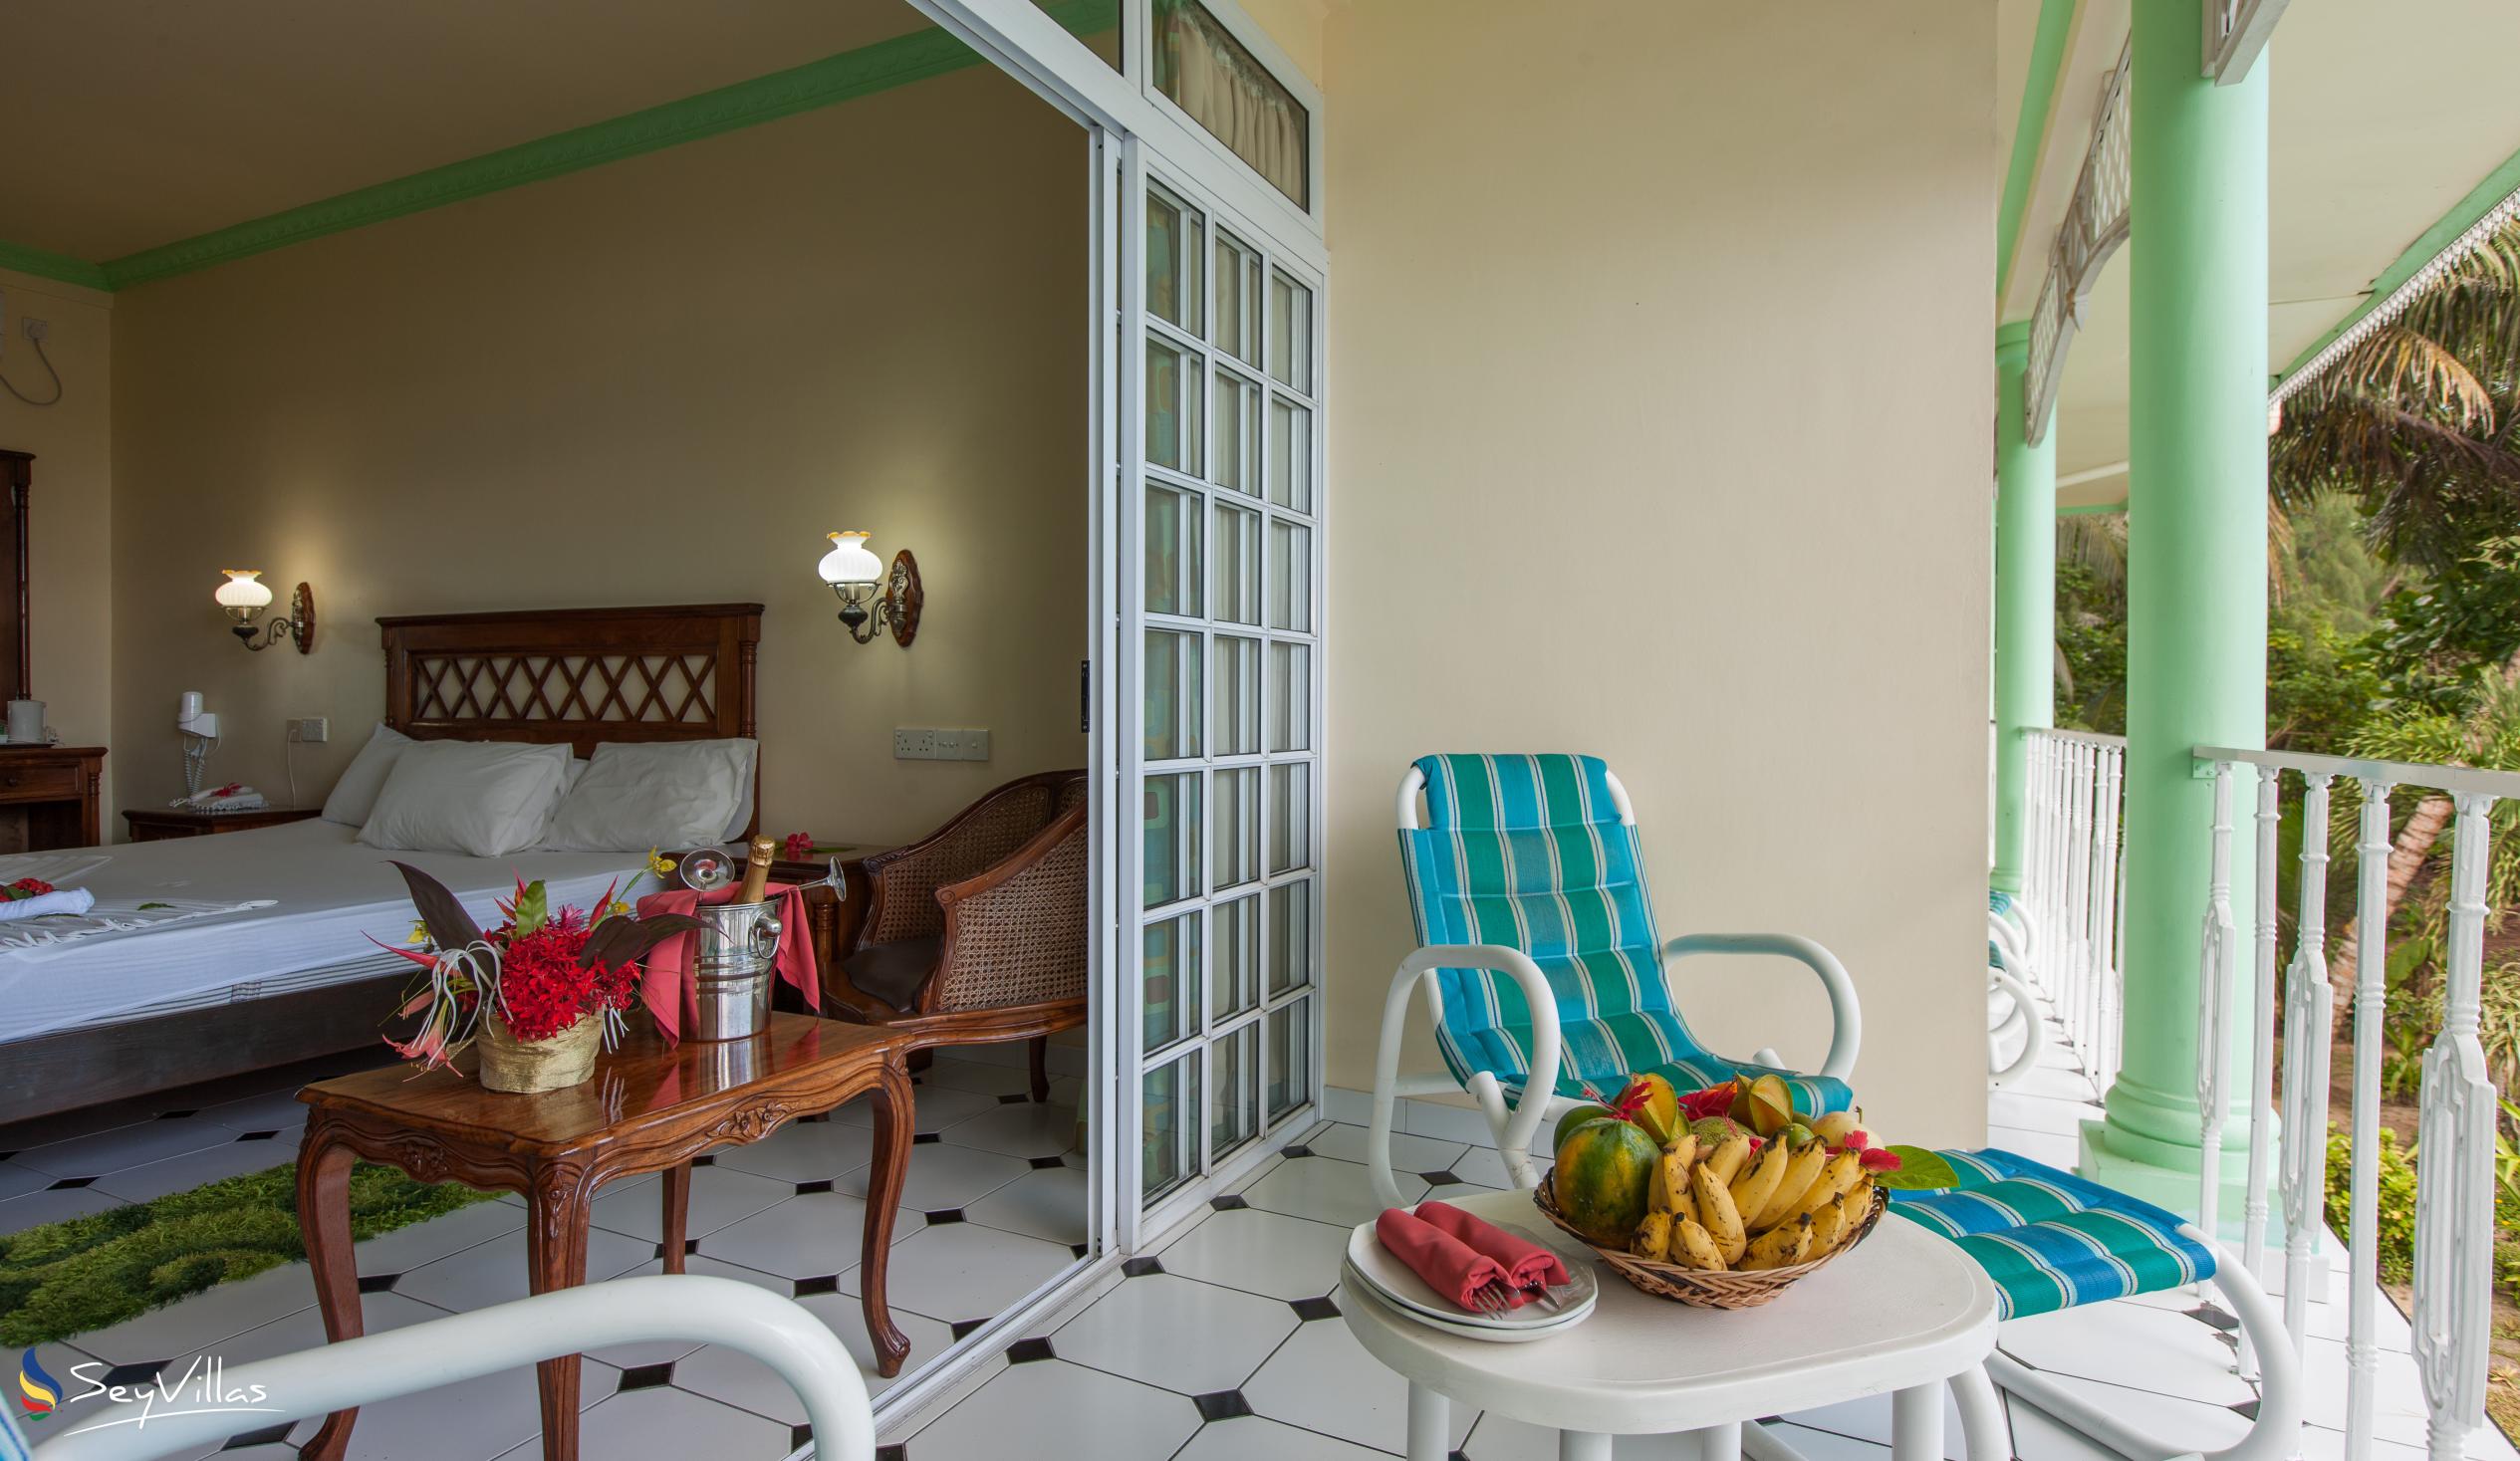 Foto 35: Palm Beach Hotel - Camera Familiare - Praslin (Seychelles)